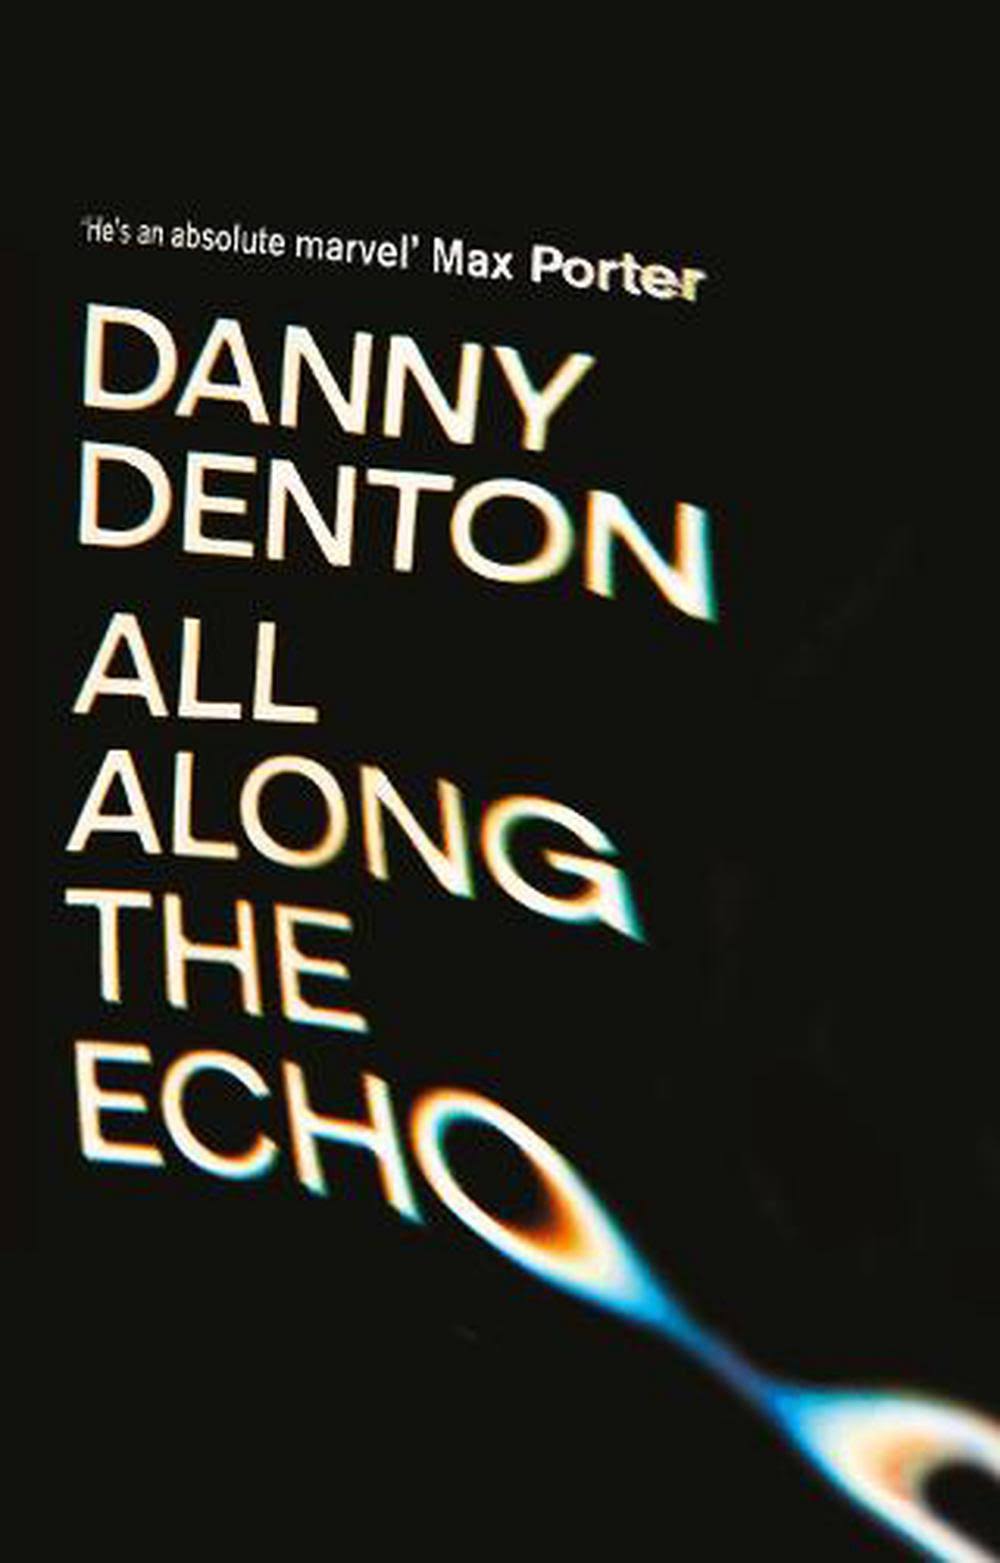 All Along The Echo by Danny Denton